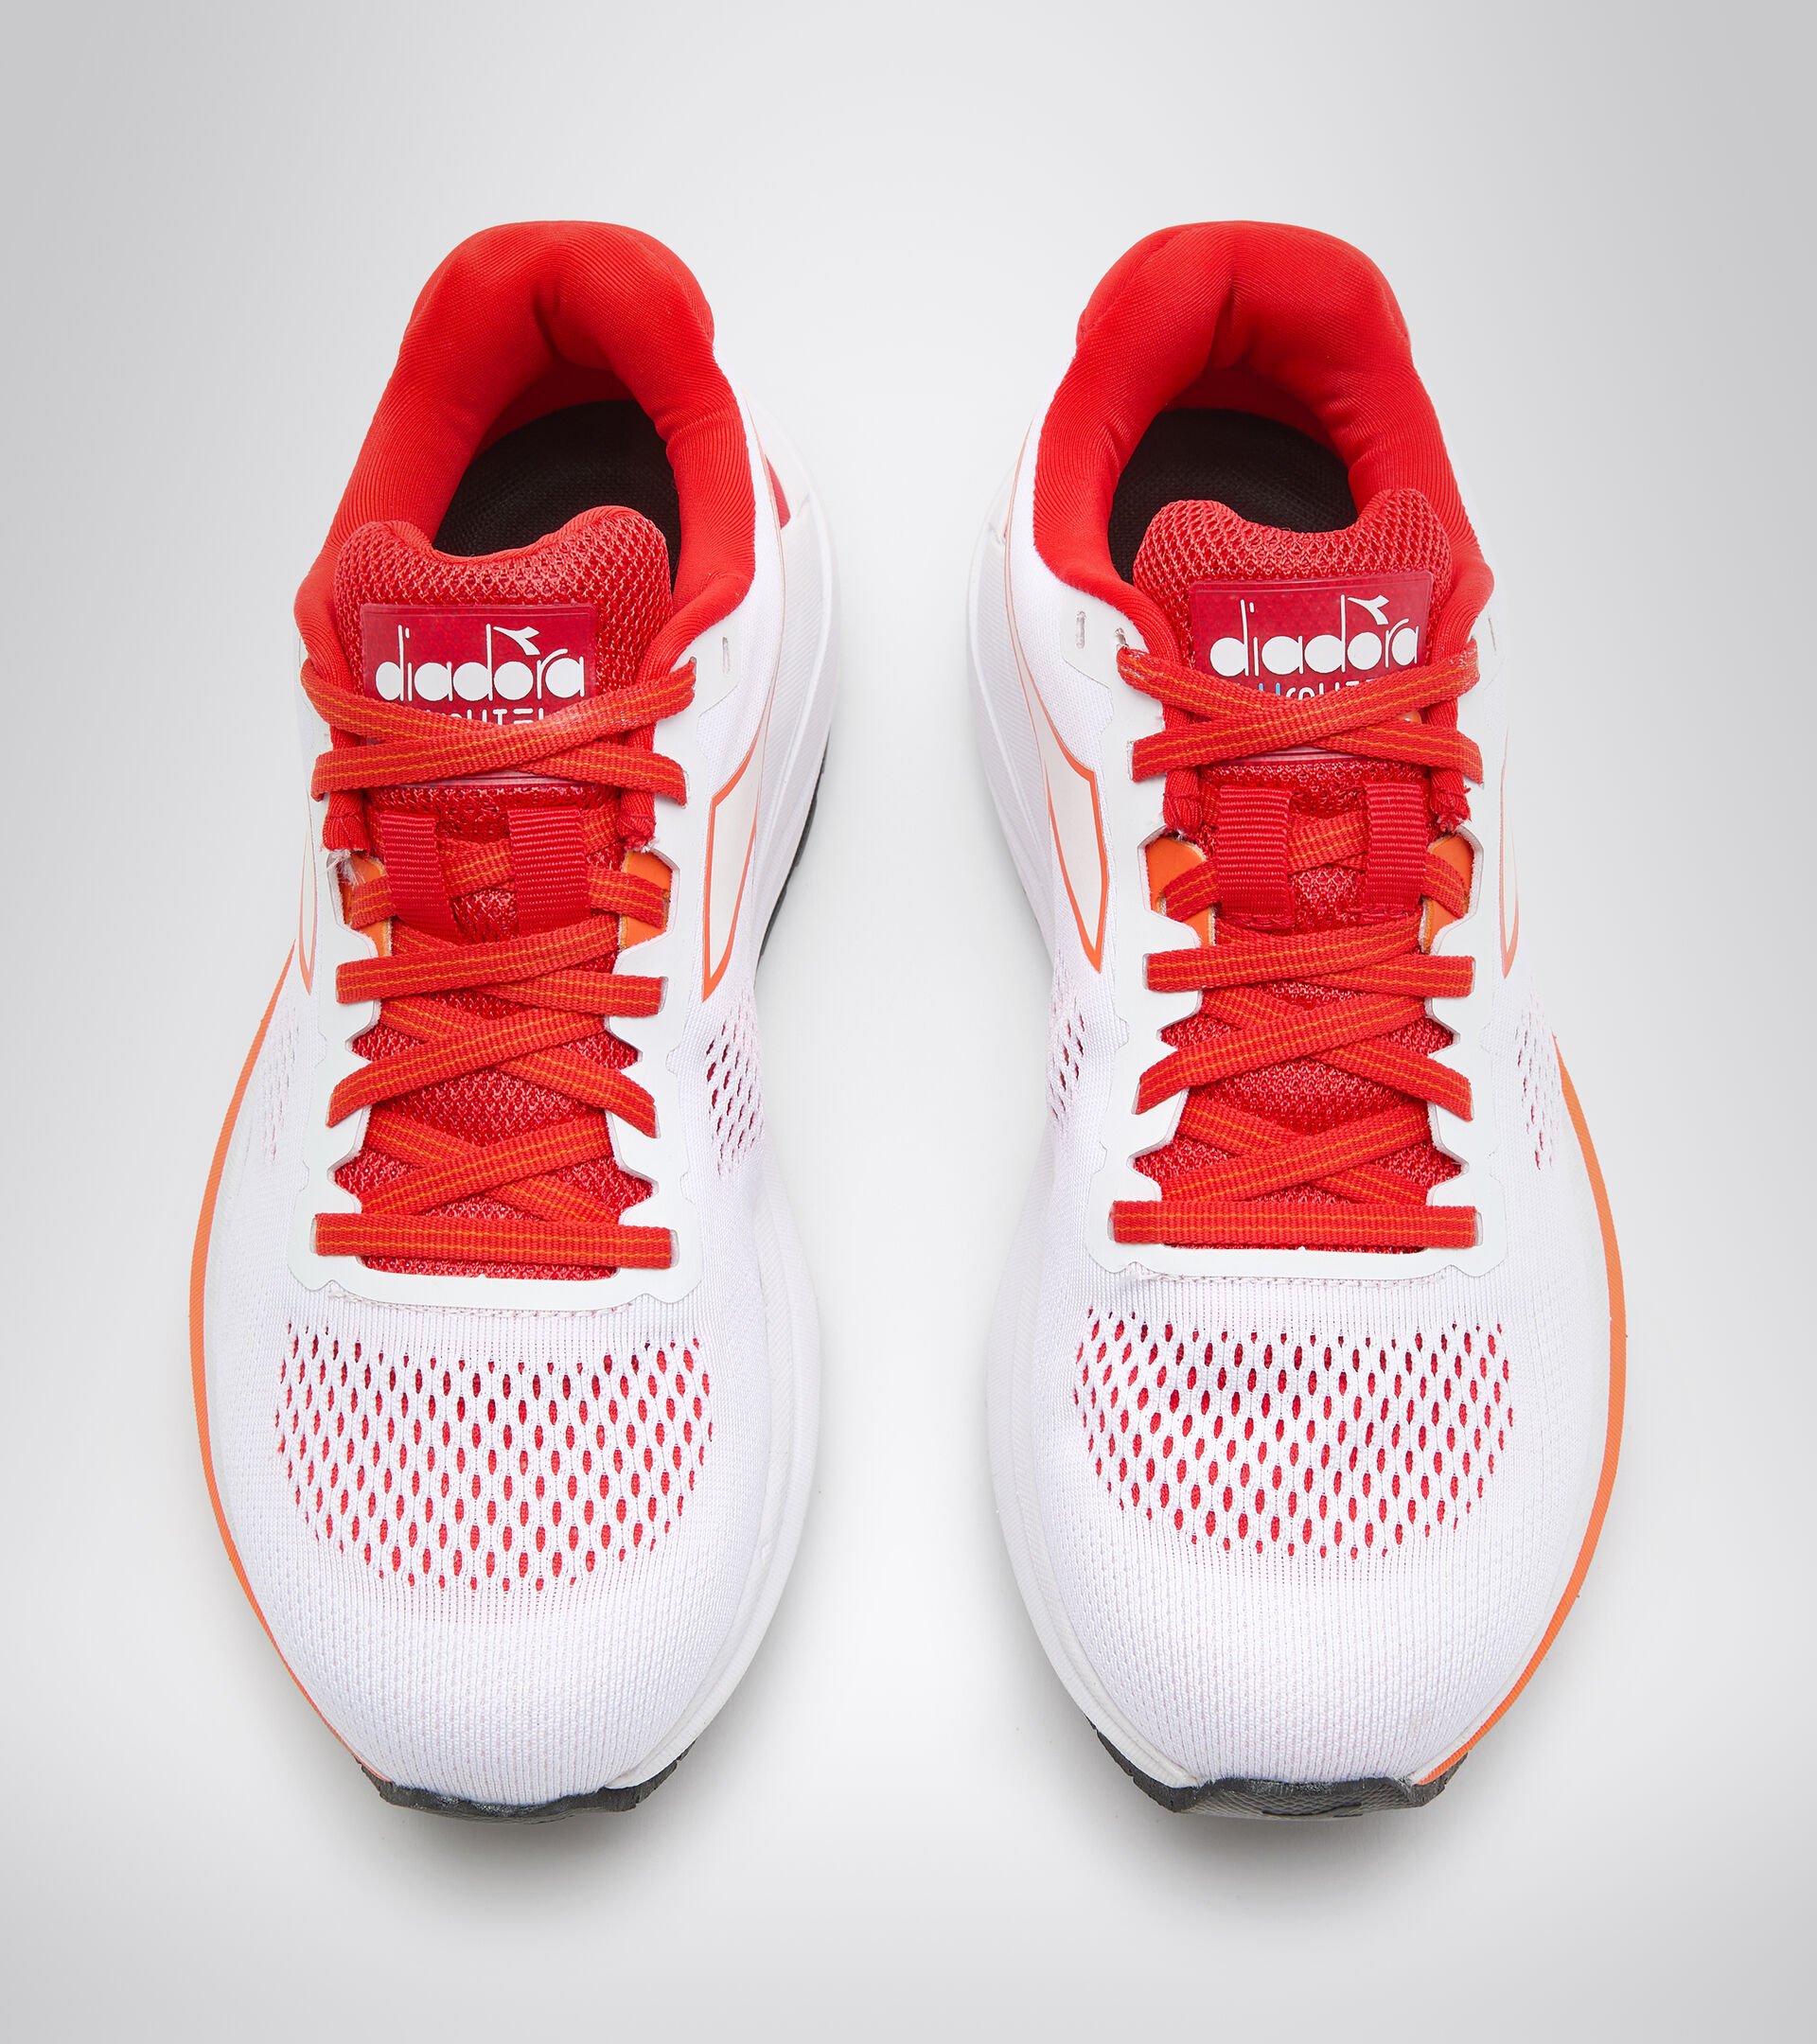 Running shoes - Women MYTHOS BLUSHIELD 7 VORTICE W WHITE/FIERY RED - Diadora